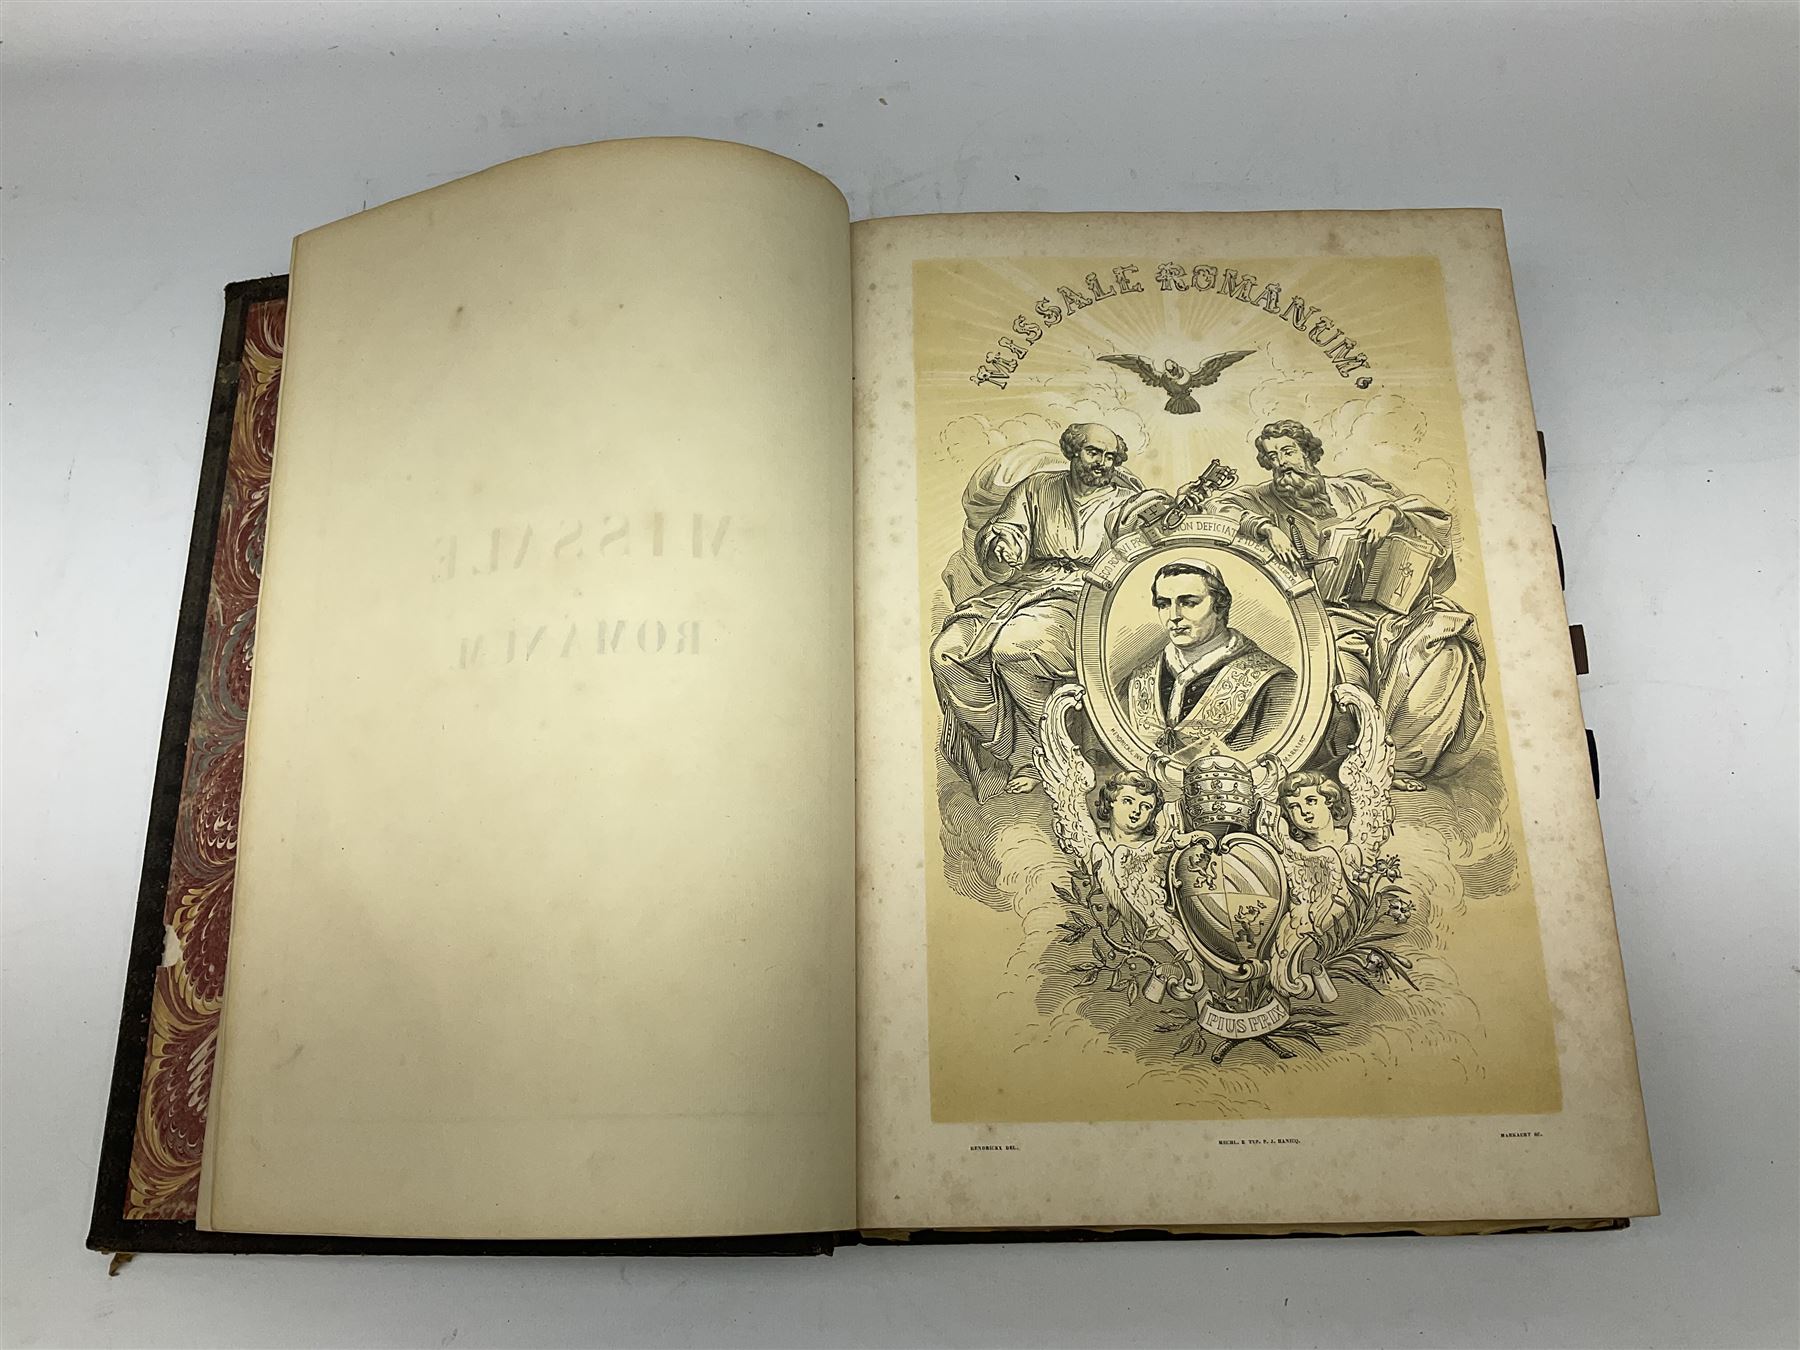 Six 19th century leather bound books of music comprising Graduale Juxta Missale Romanum and Antiphon - Image 14 of 21